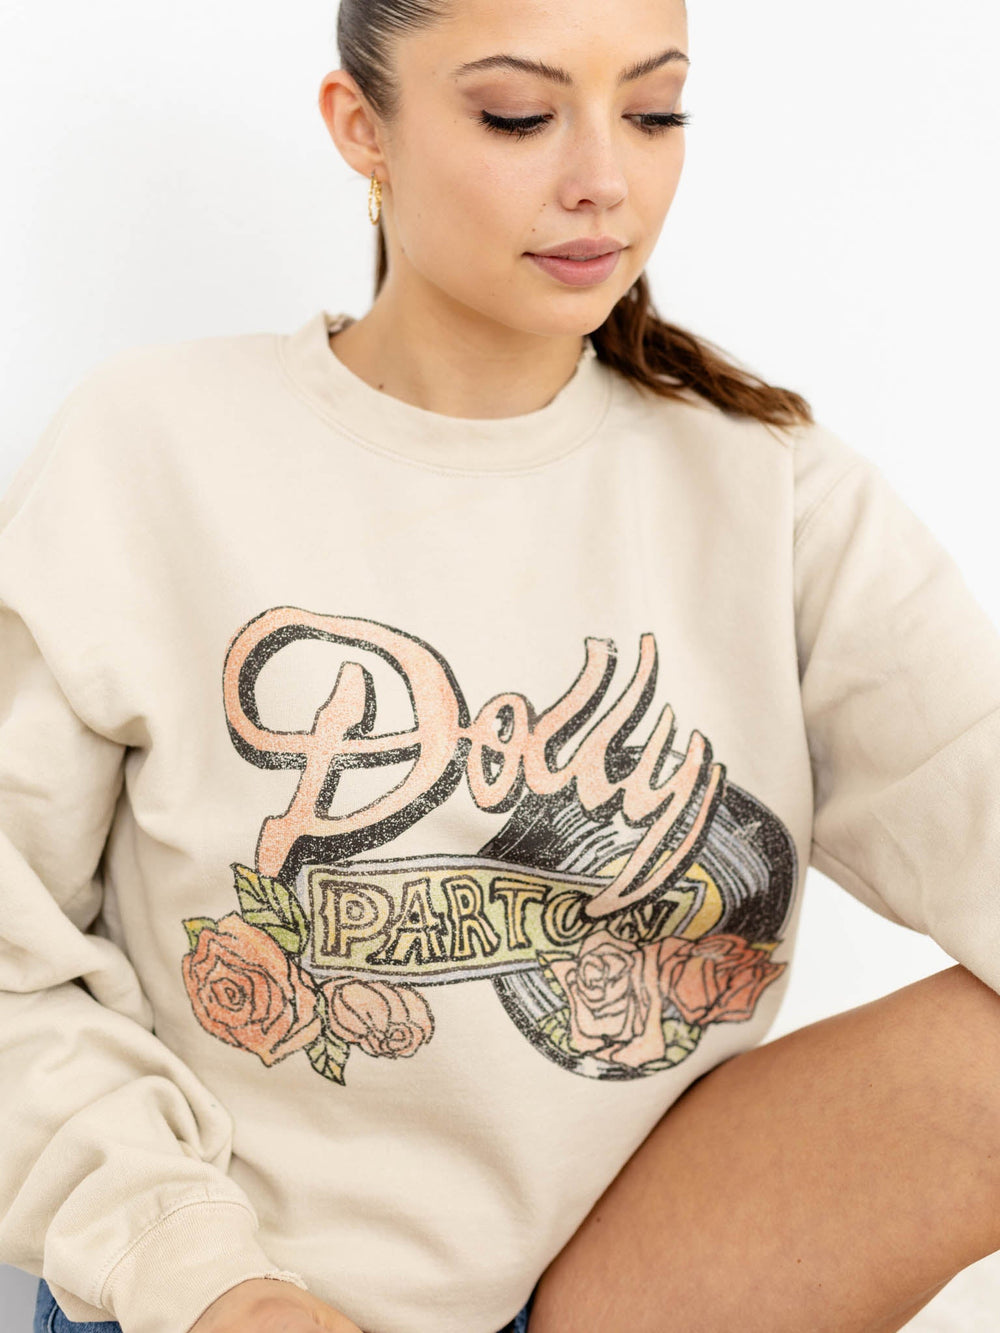 Dolly Parton Rose Record Graphic SweatshirtScreen tees